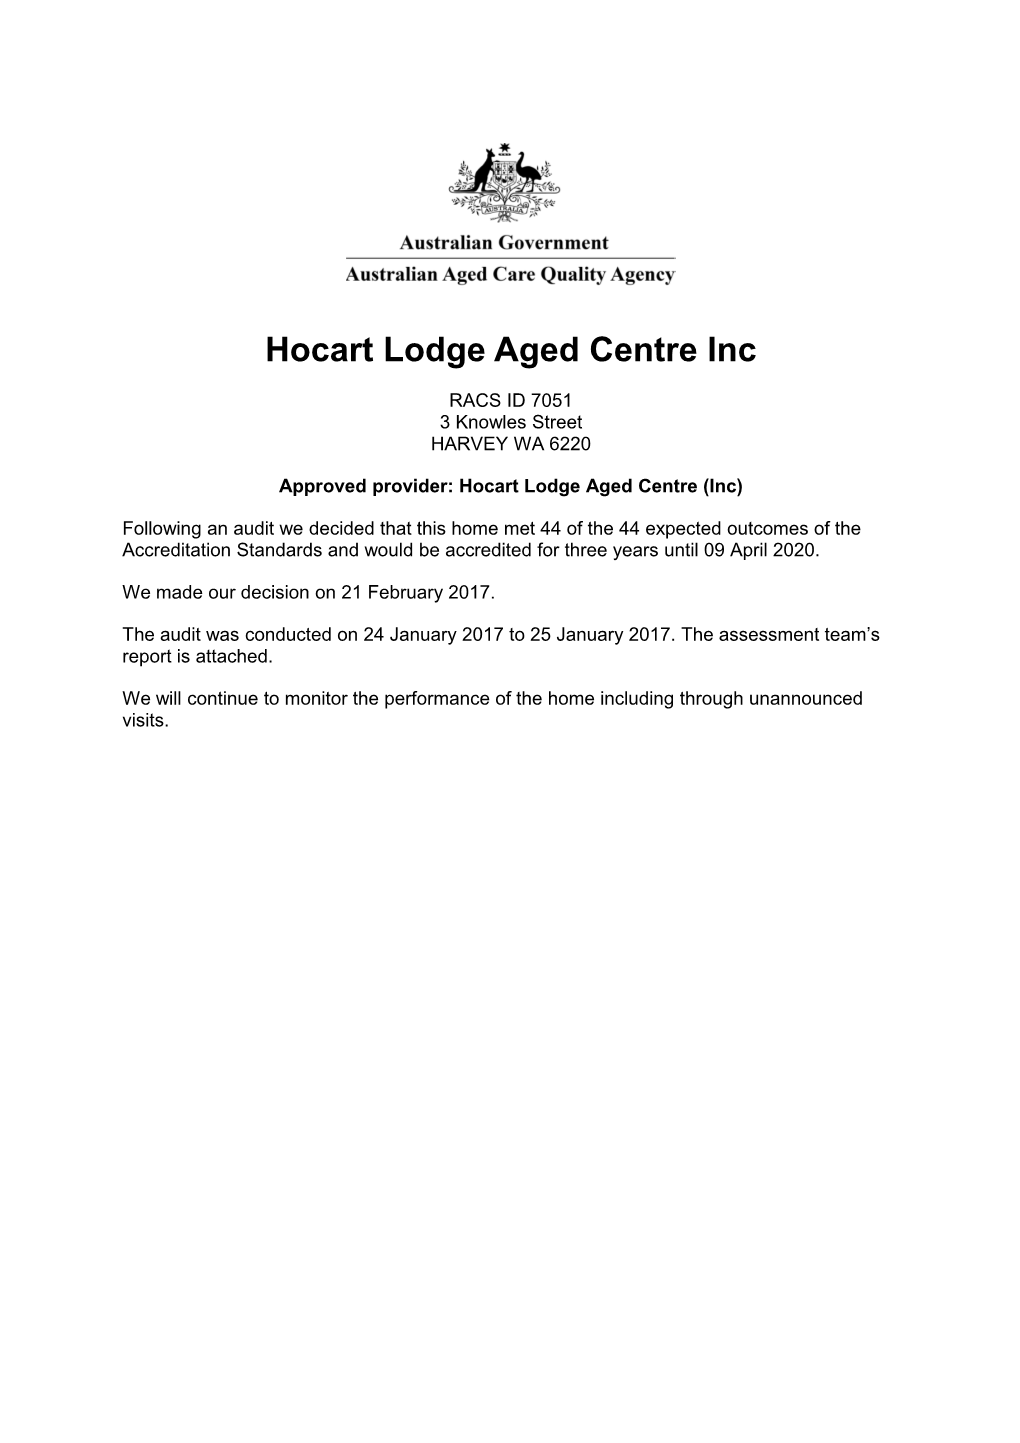 Hocart Lodge Aged Centre Inc